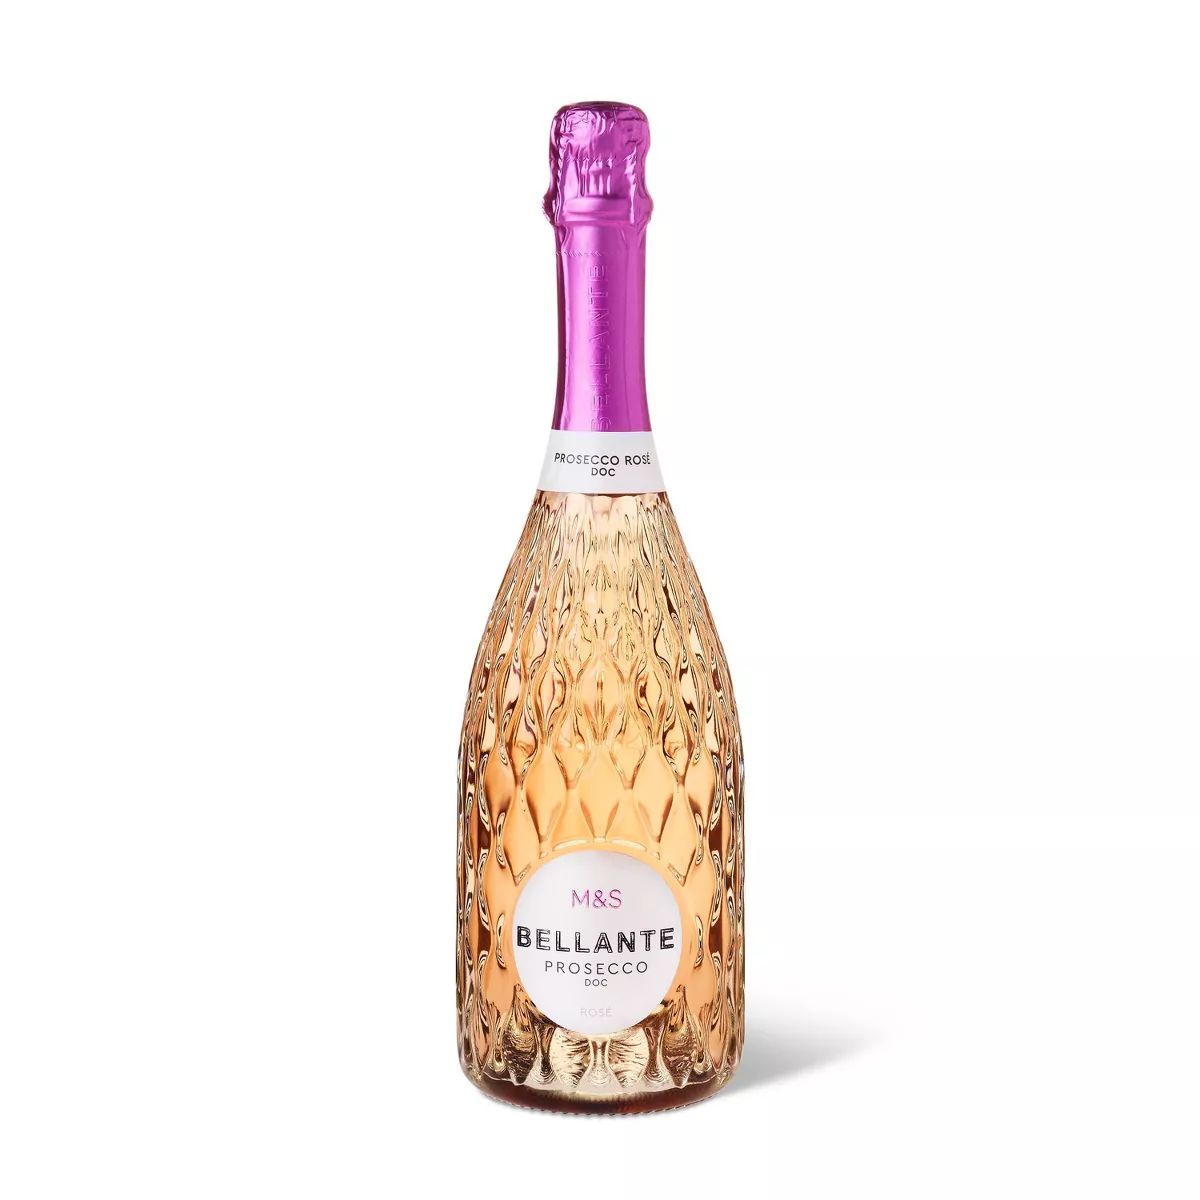 M&S Bellante Prosecco Rosé - 750ml Bottle | Target